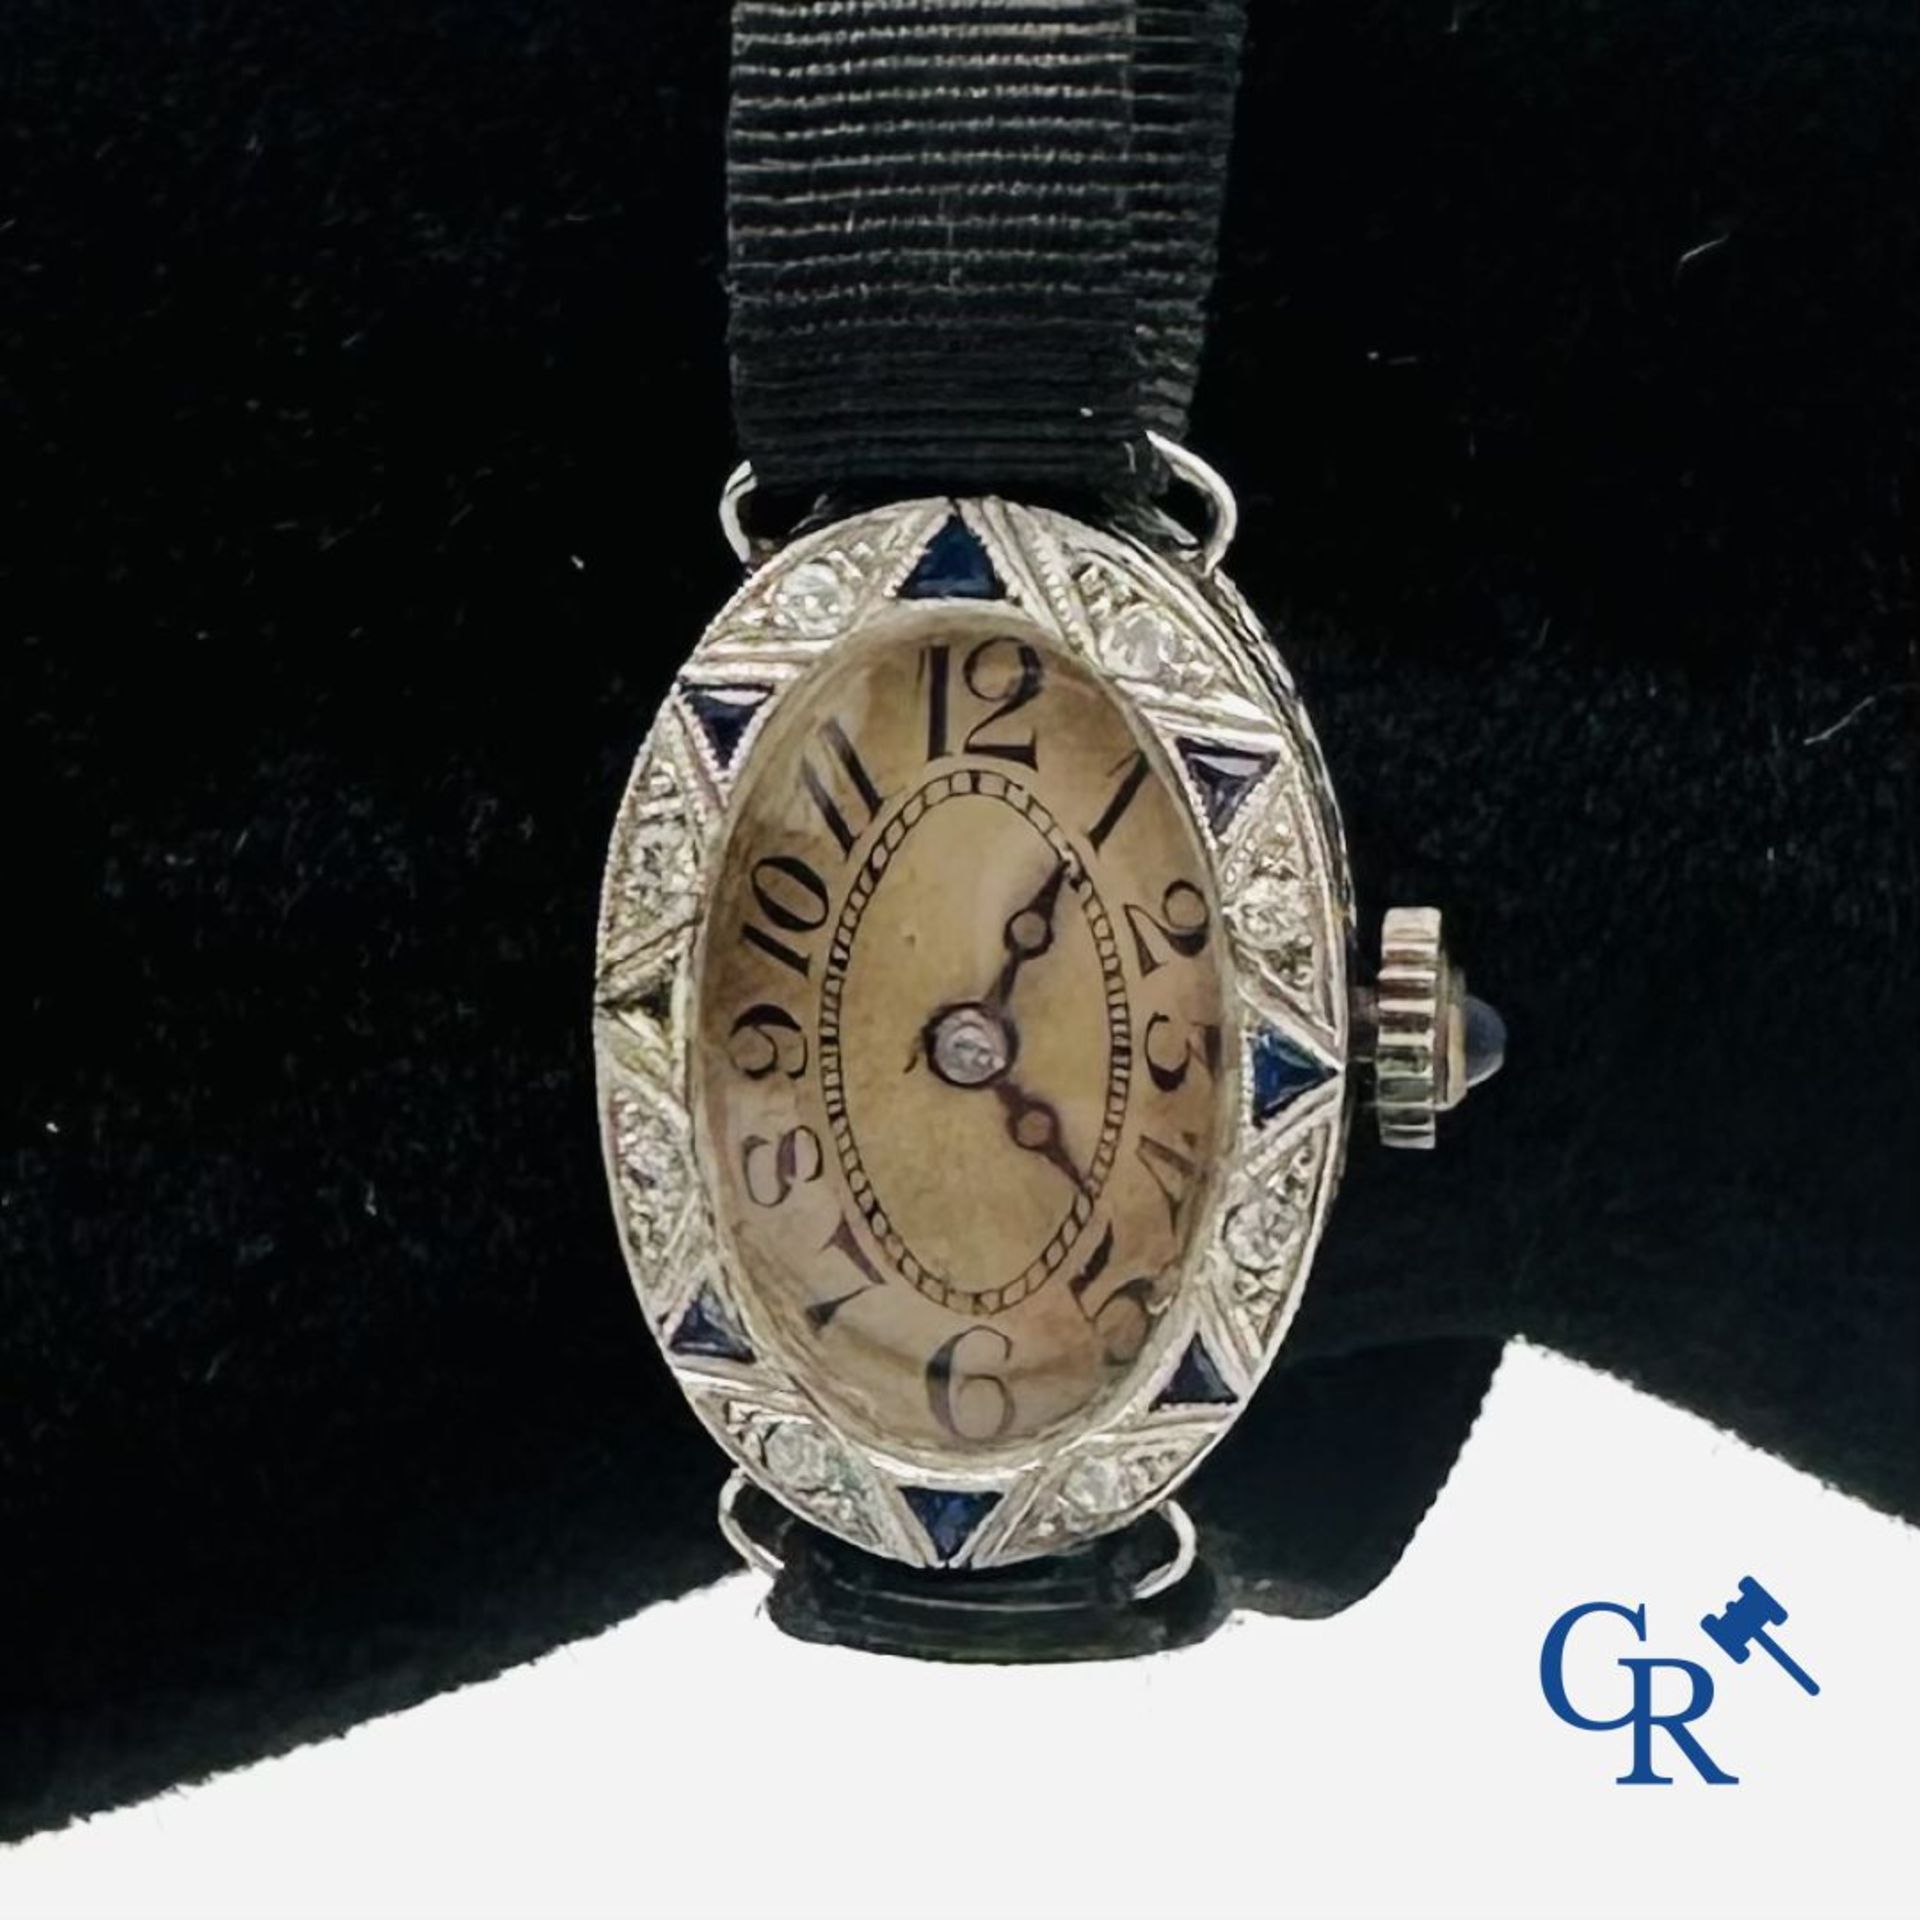 Jewellery - Timepiece: Art Deco ladies watch in Platinum.